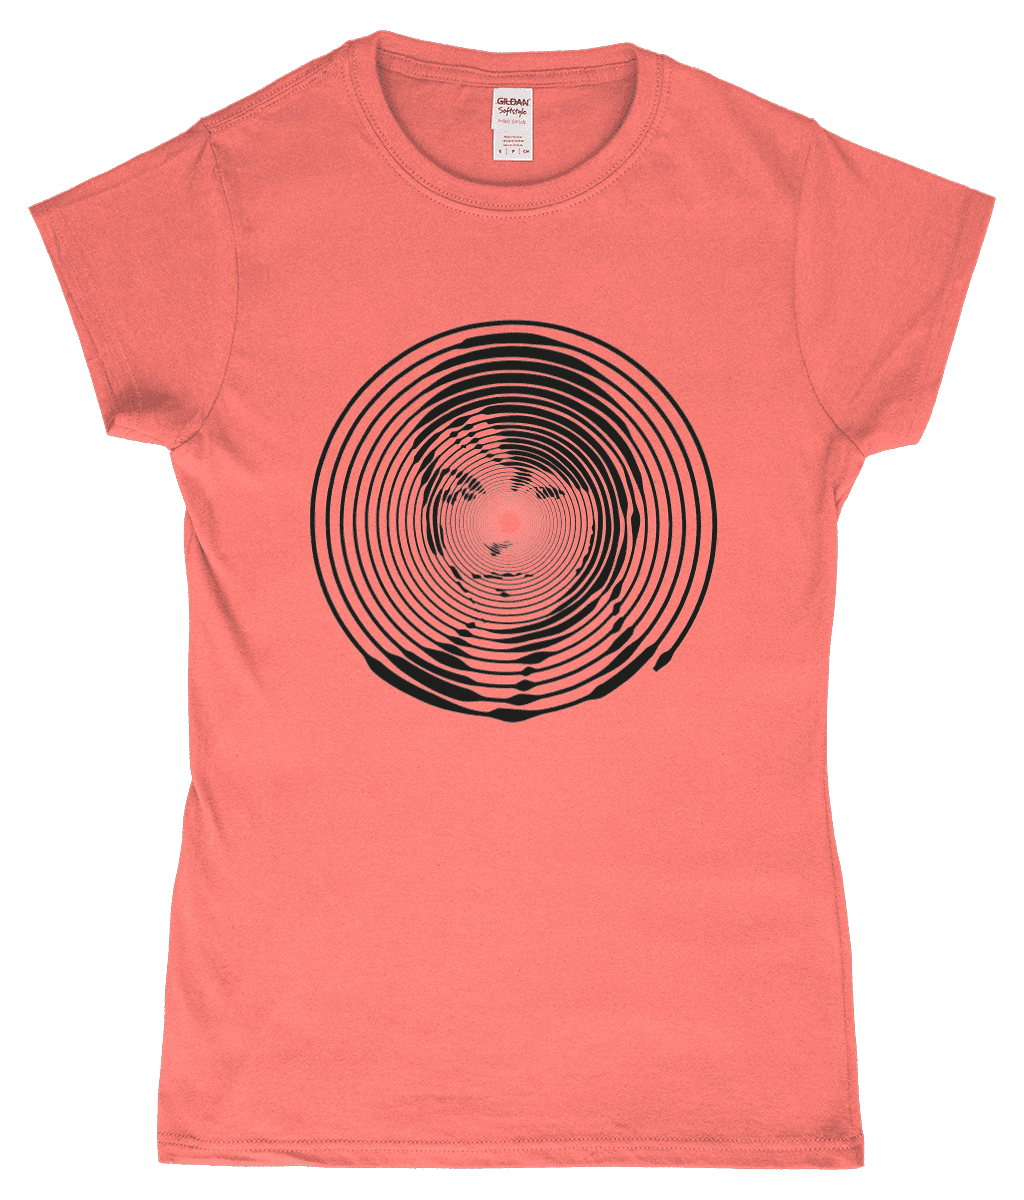 Paul McCartney Vinyl Record T-Shirt Design Orange Heather